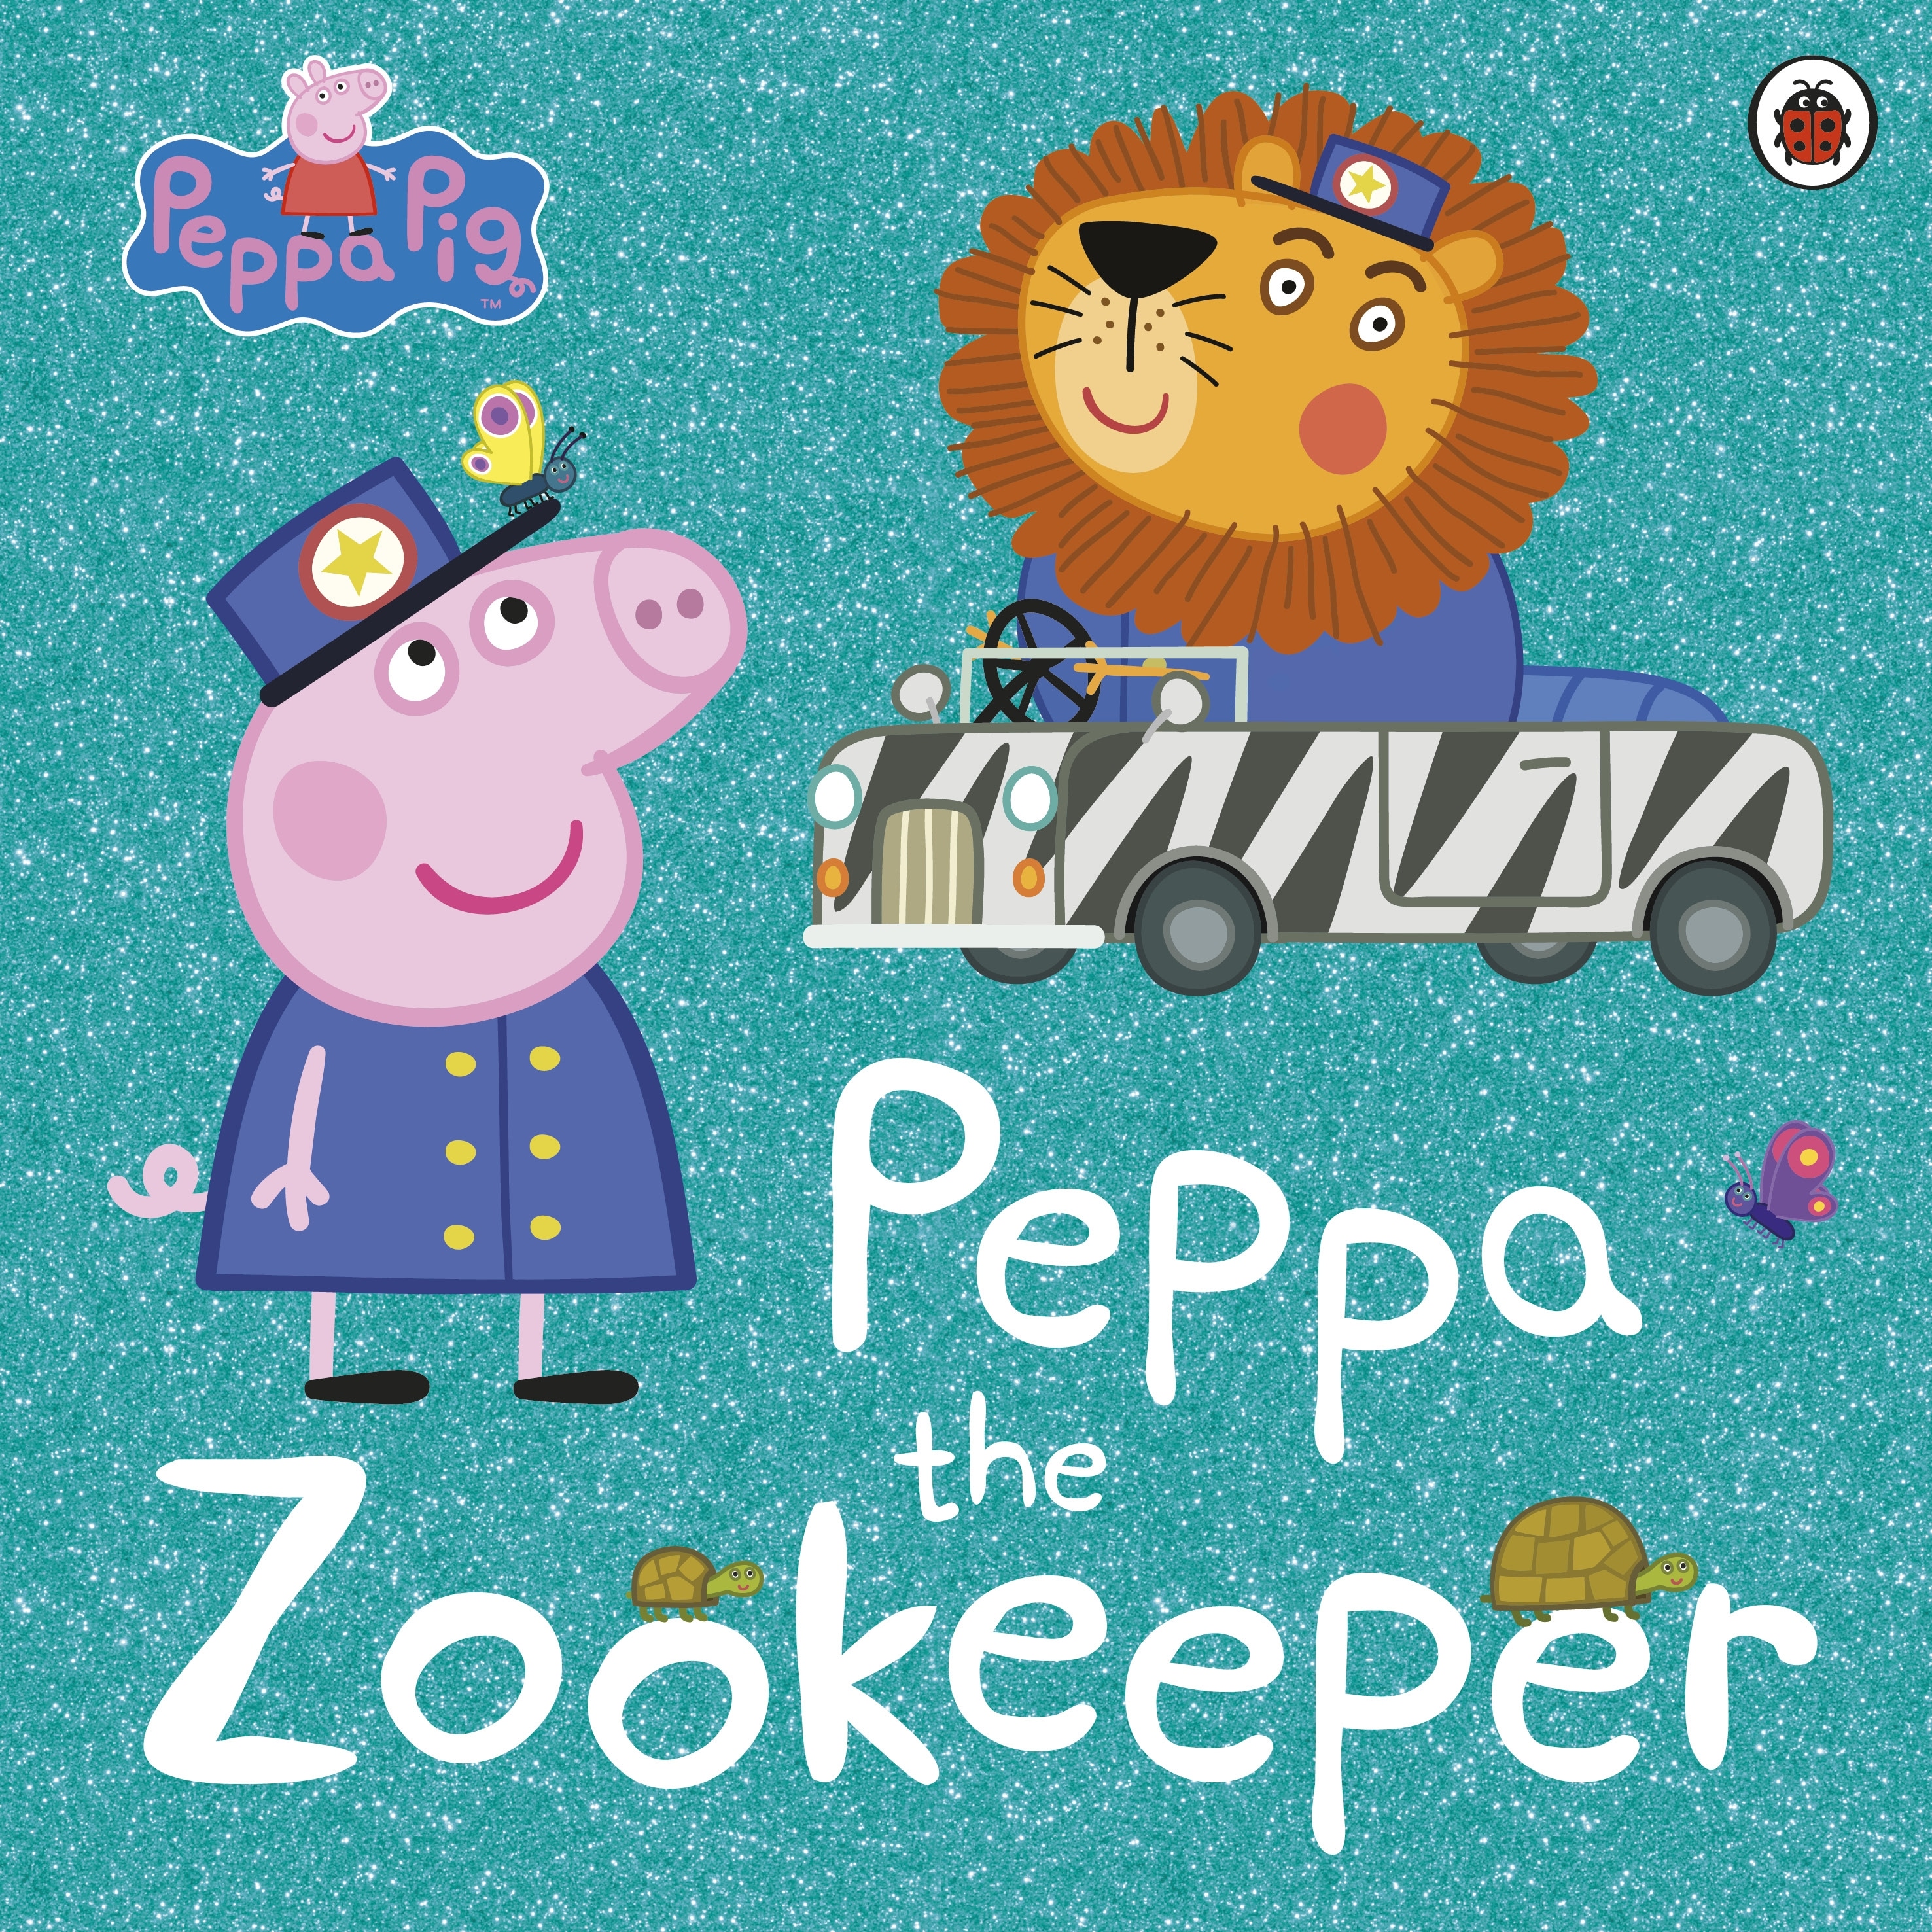 Book “Peppa Pig: Peppa The Zookeeper” by Peppa Pig — April 28, 2022